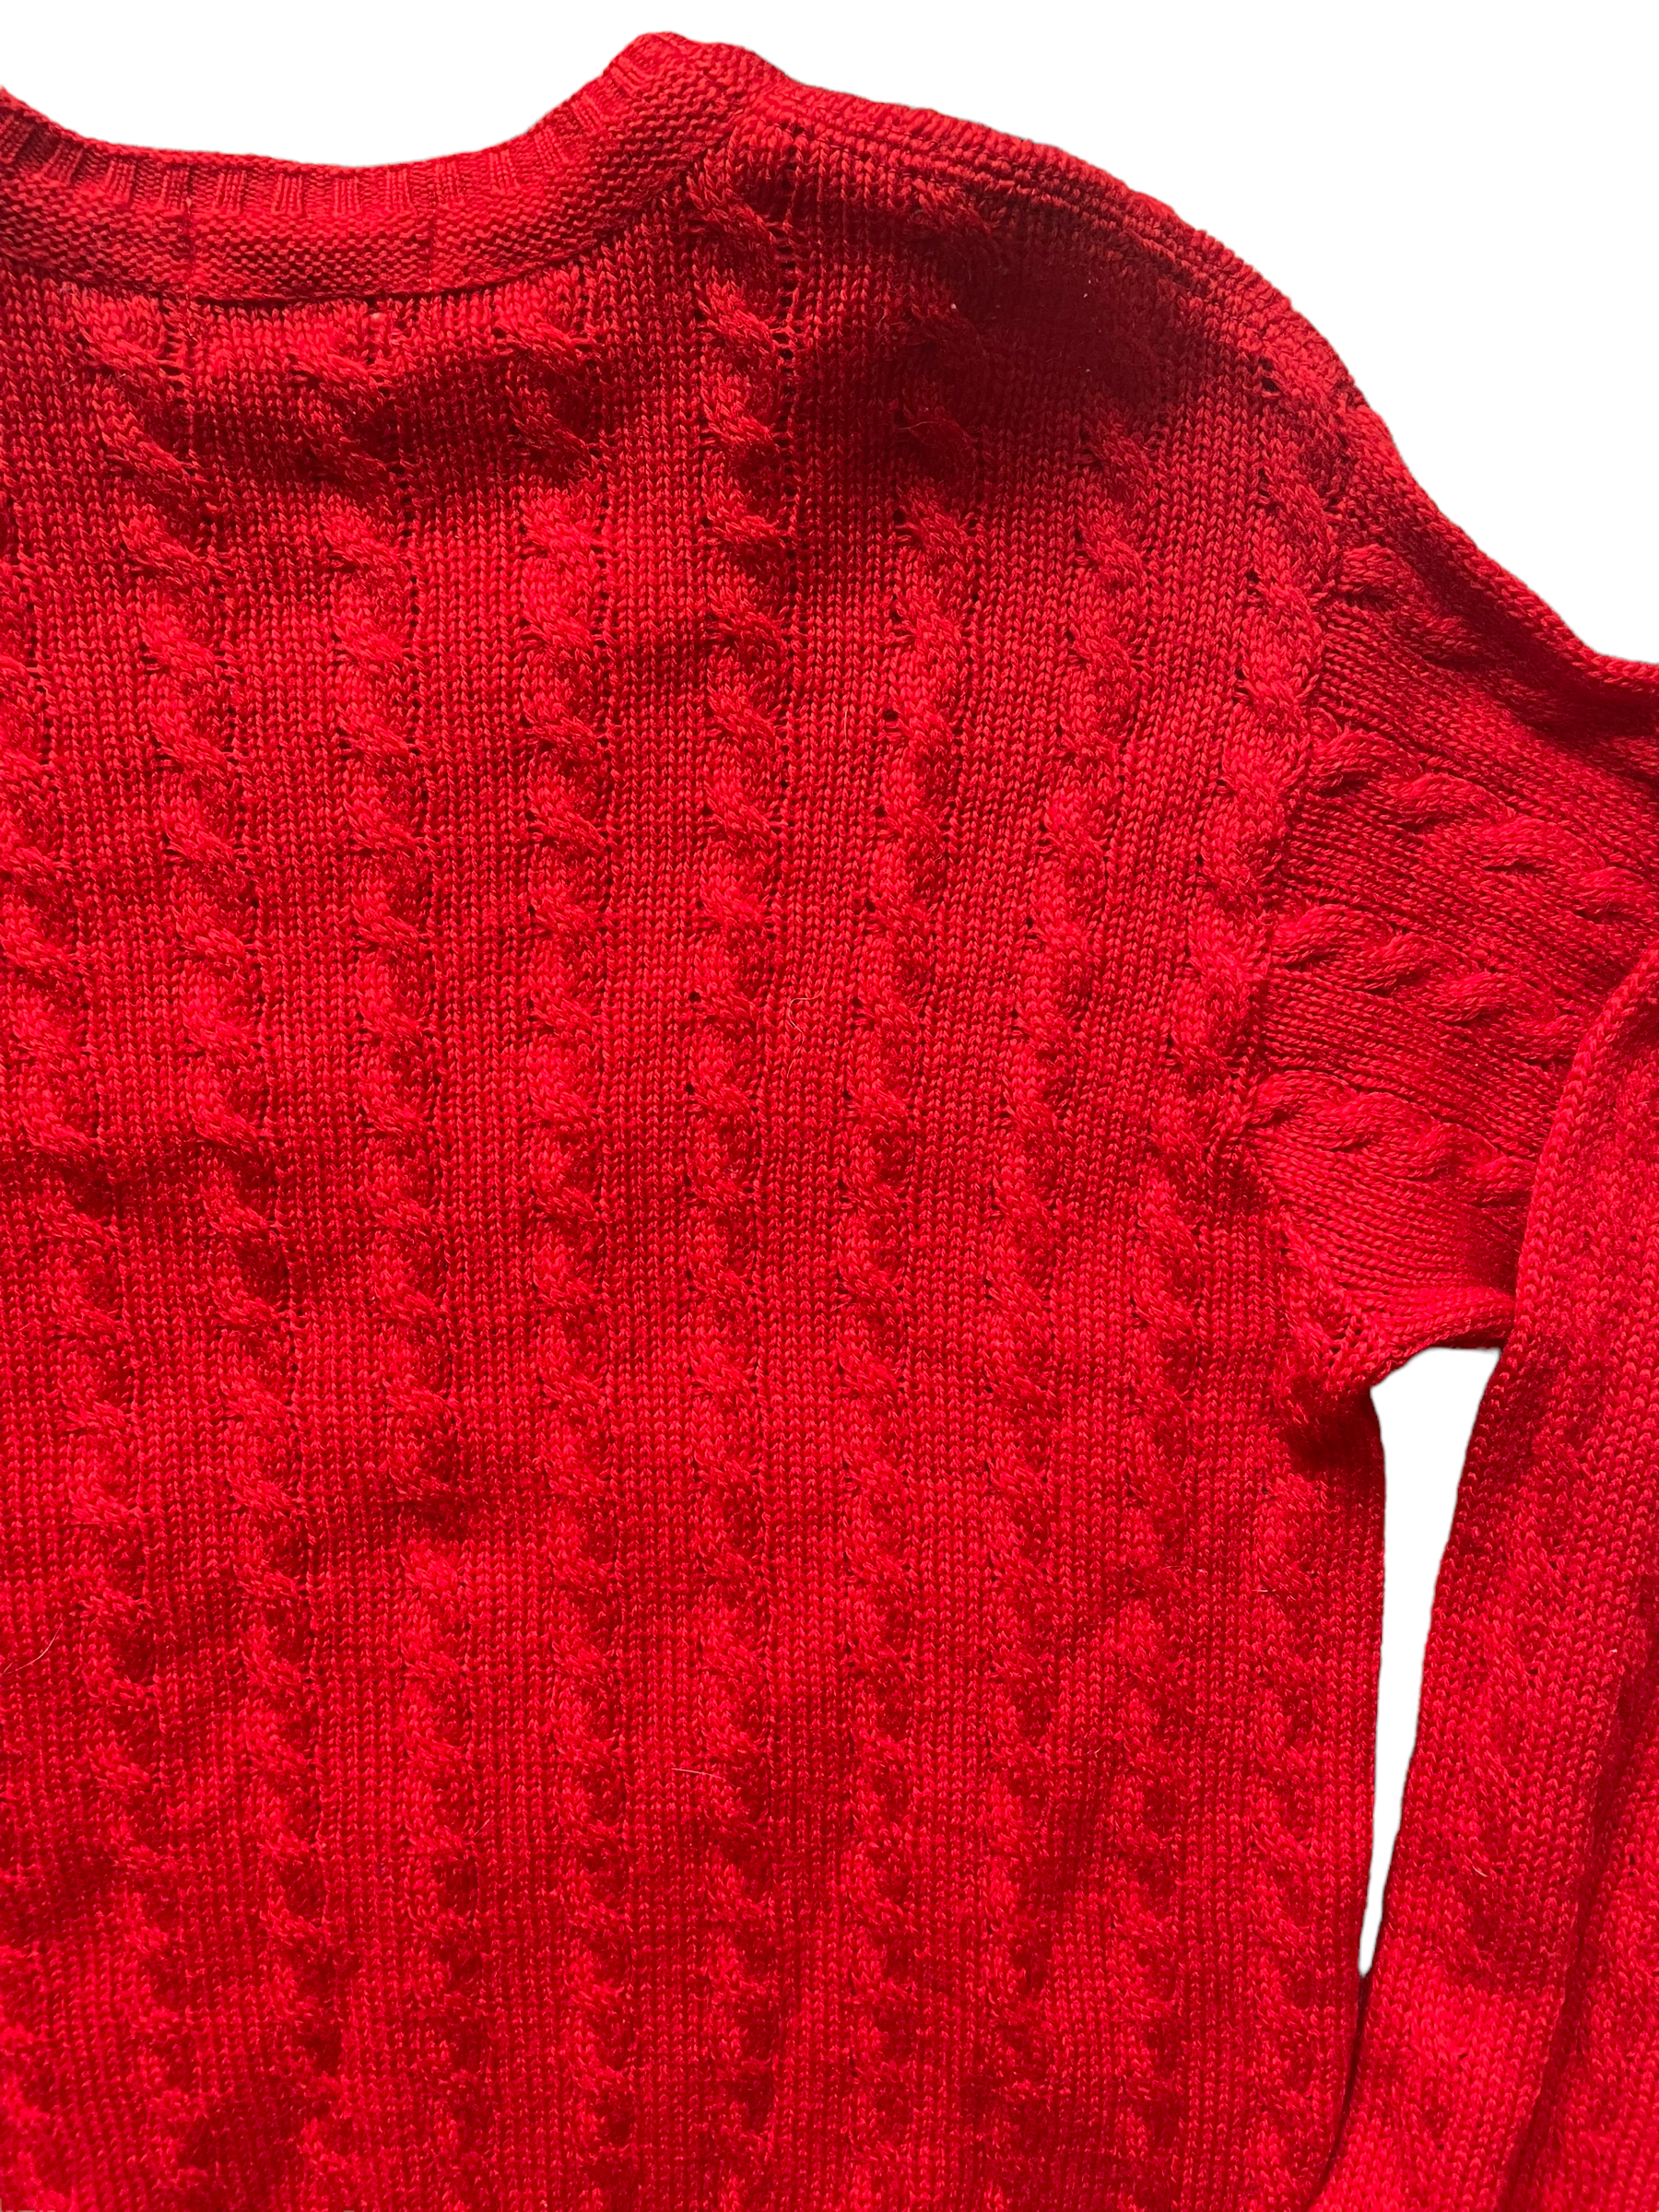 Vintage 1950s Jantzen Cable Knit Wool Sweater | Barn Owl Seattle | Seattle Vintage Sweaters Back right shoulder view.